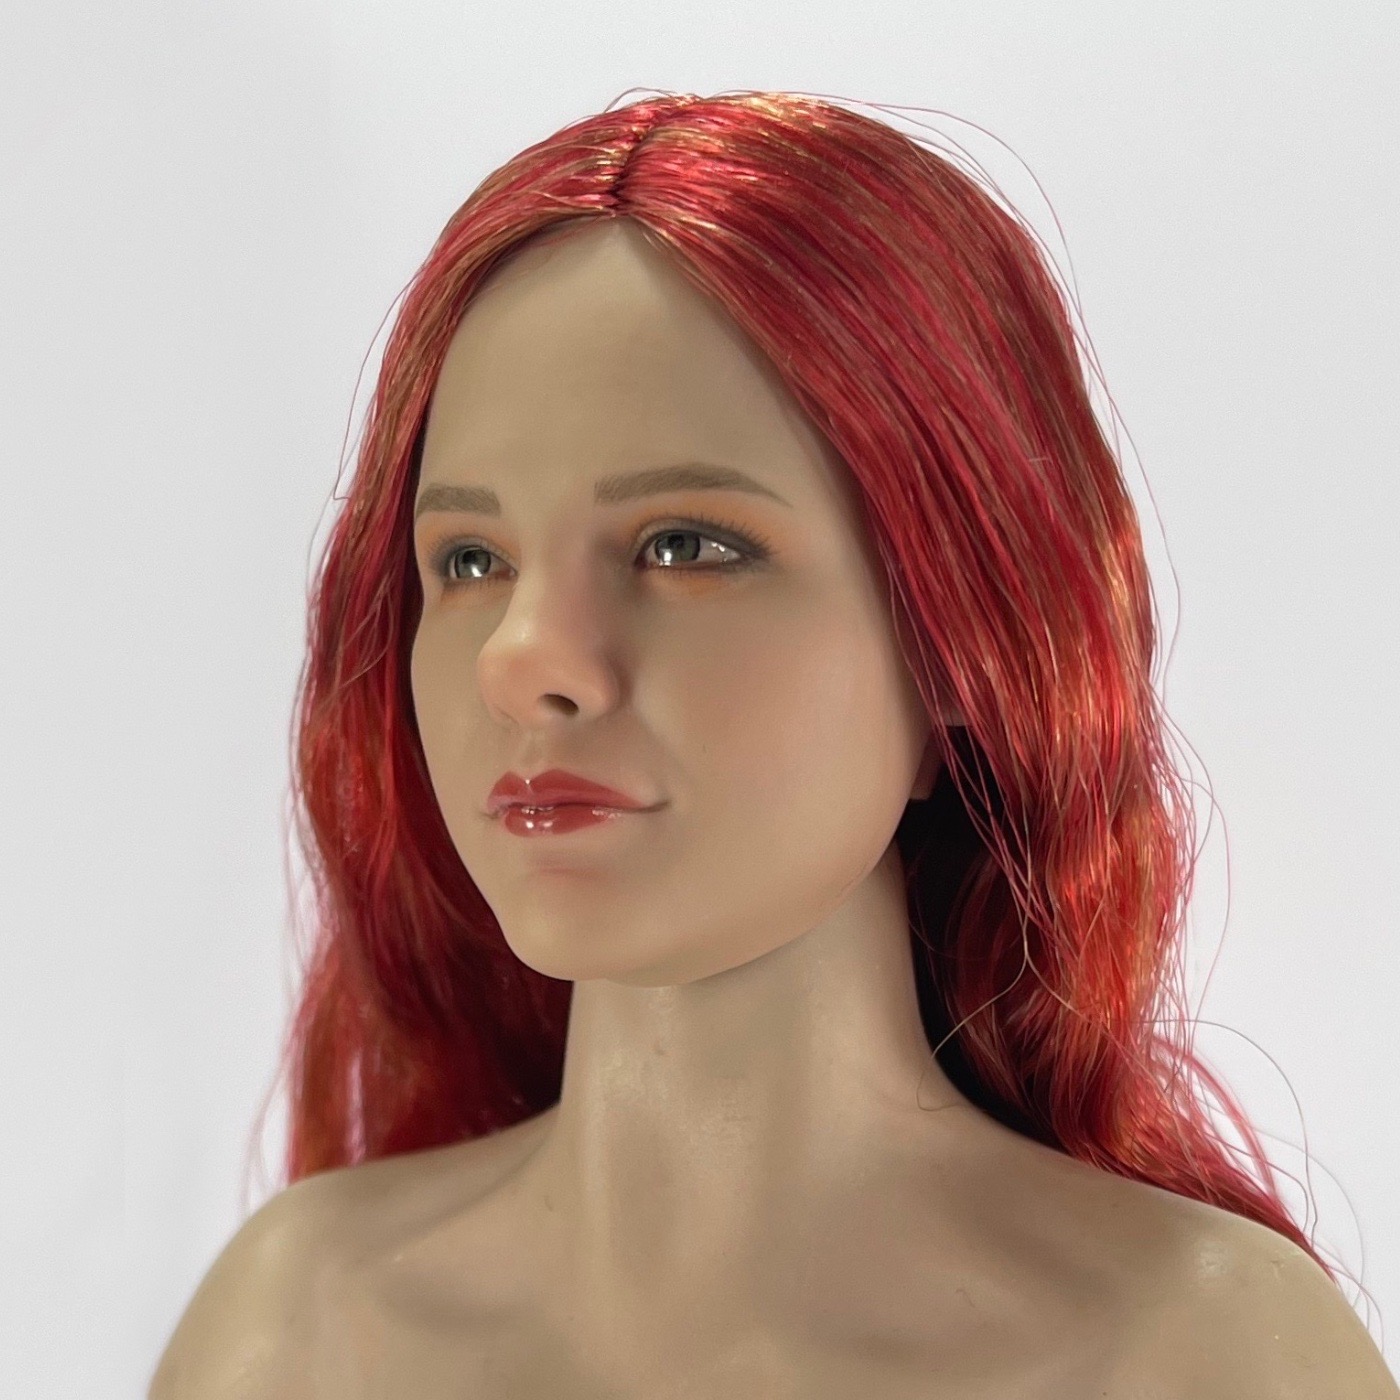 Female - NEW PRODUCT: SUPER DUCK SDH036 1/6 Scale Female head sculpt in 4 styles 52860116643_3d0fe88b7d_o